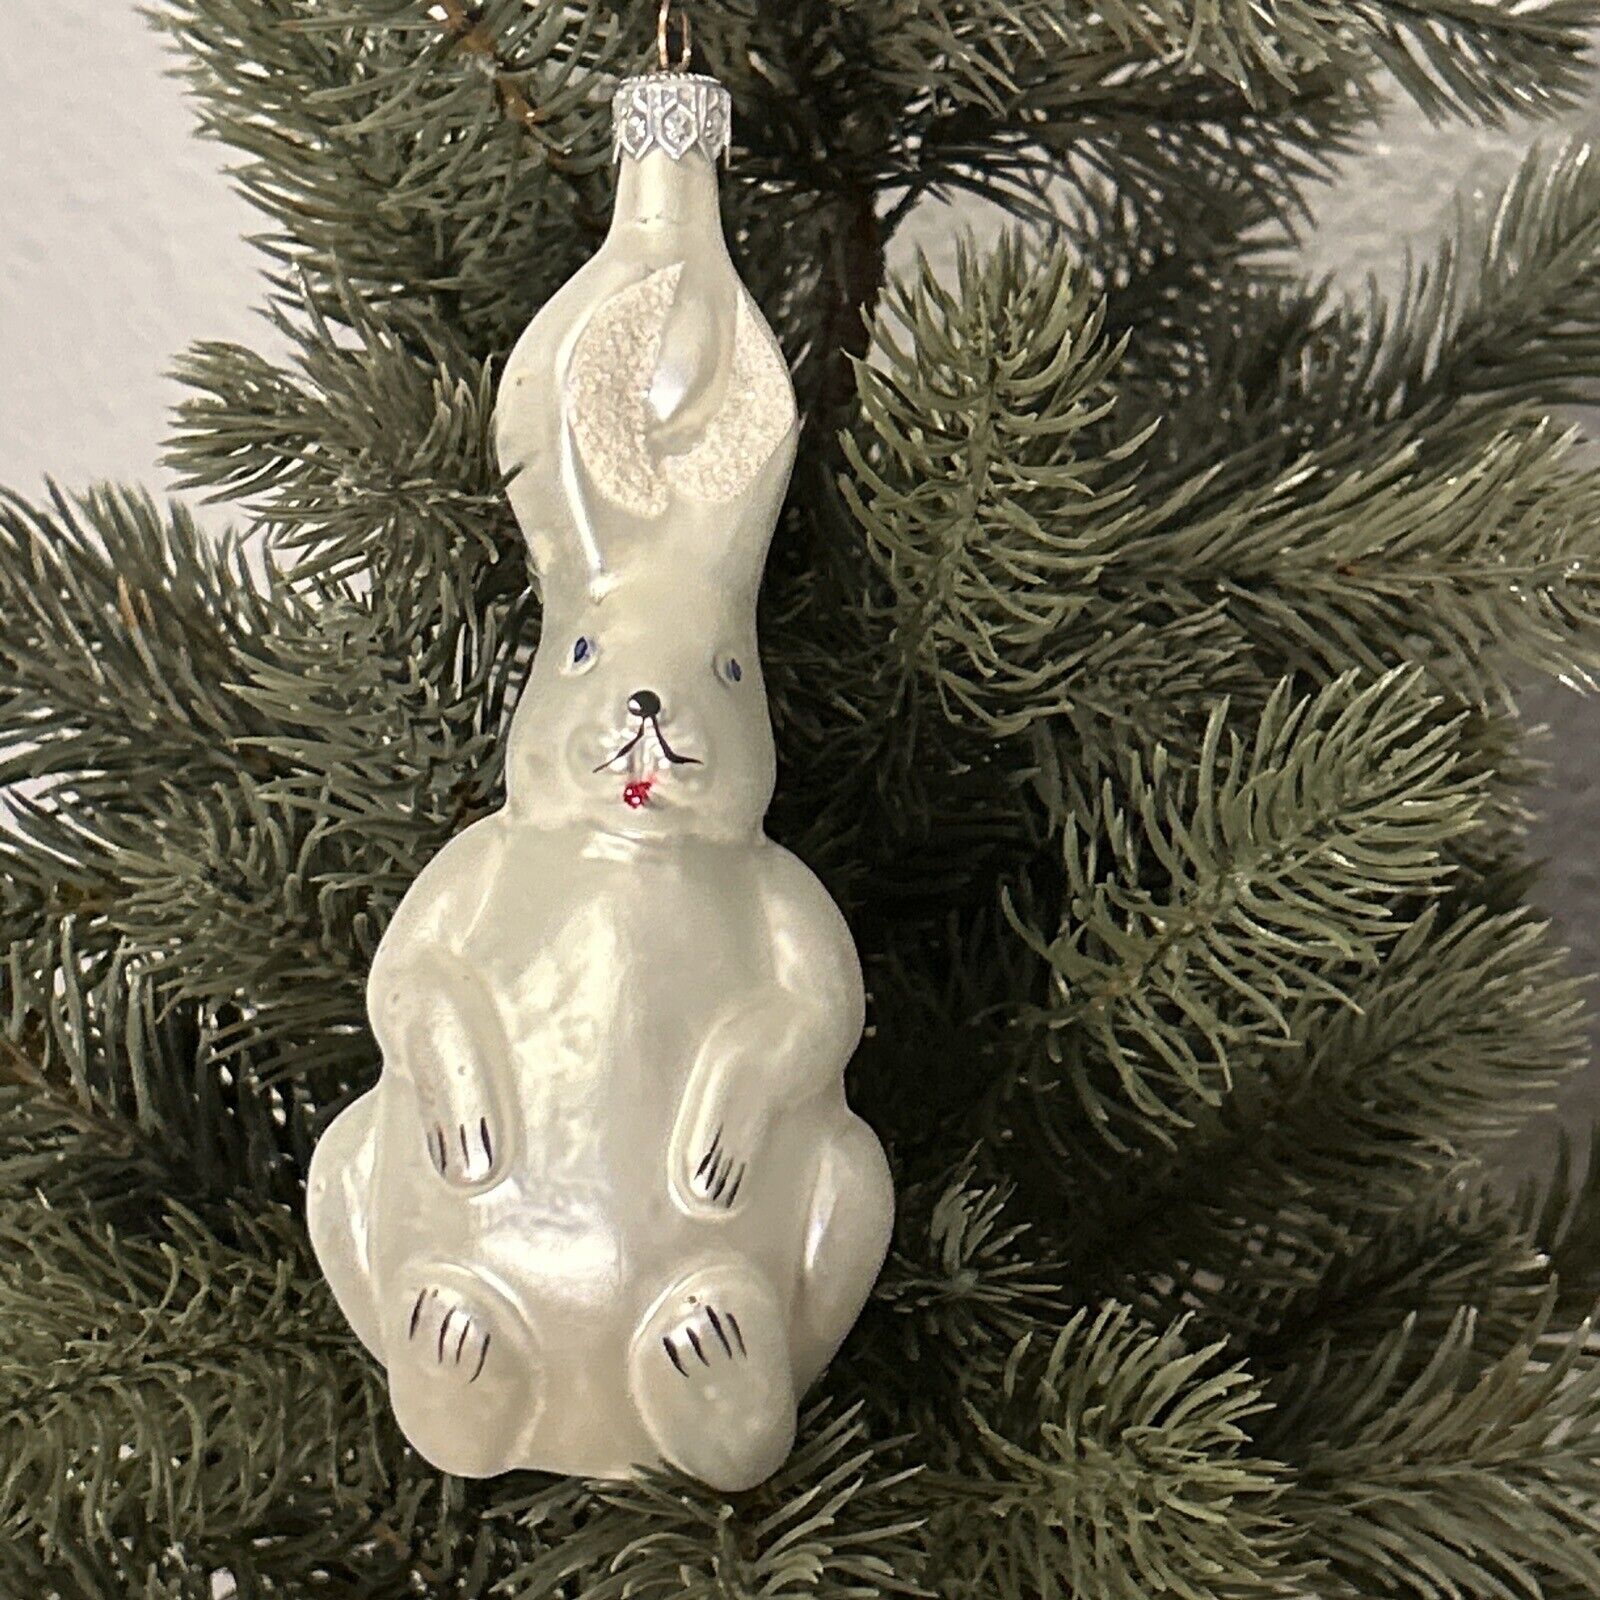 Polish White Rabbit Ornament/Made in Poland Rabbit Ornament/White Bunny Ornament